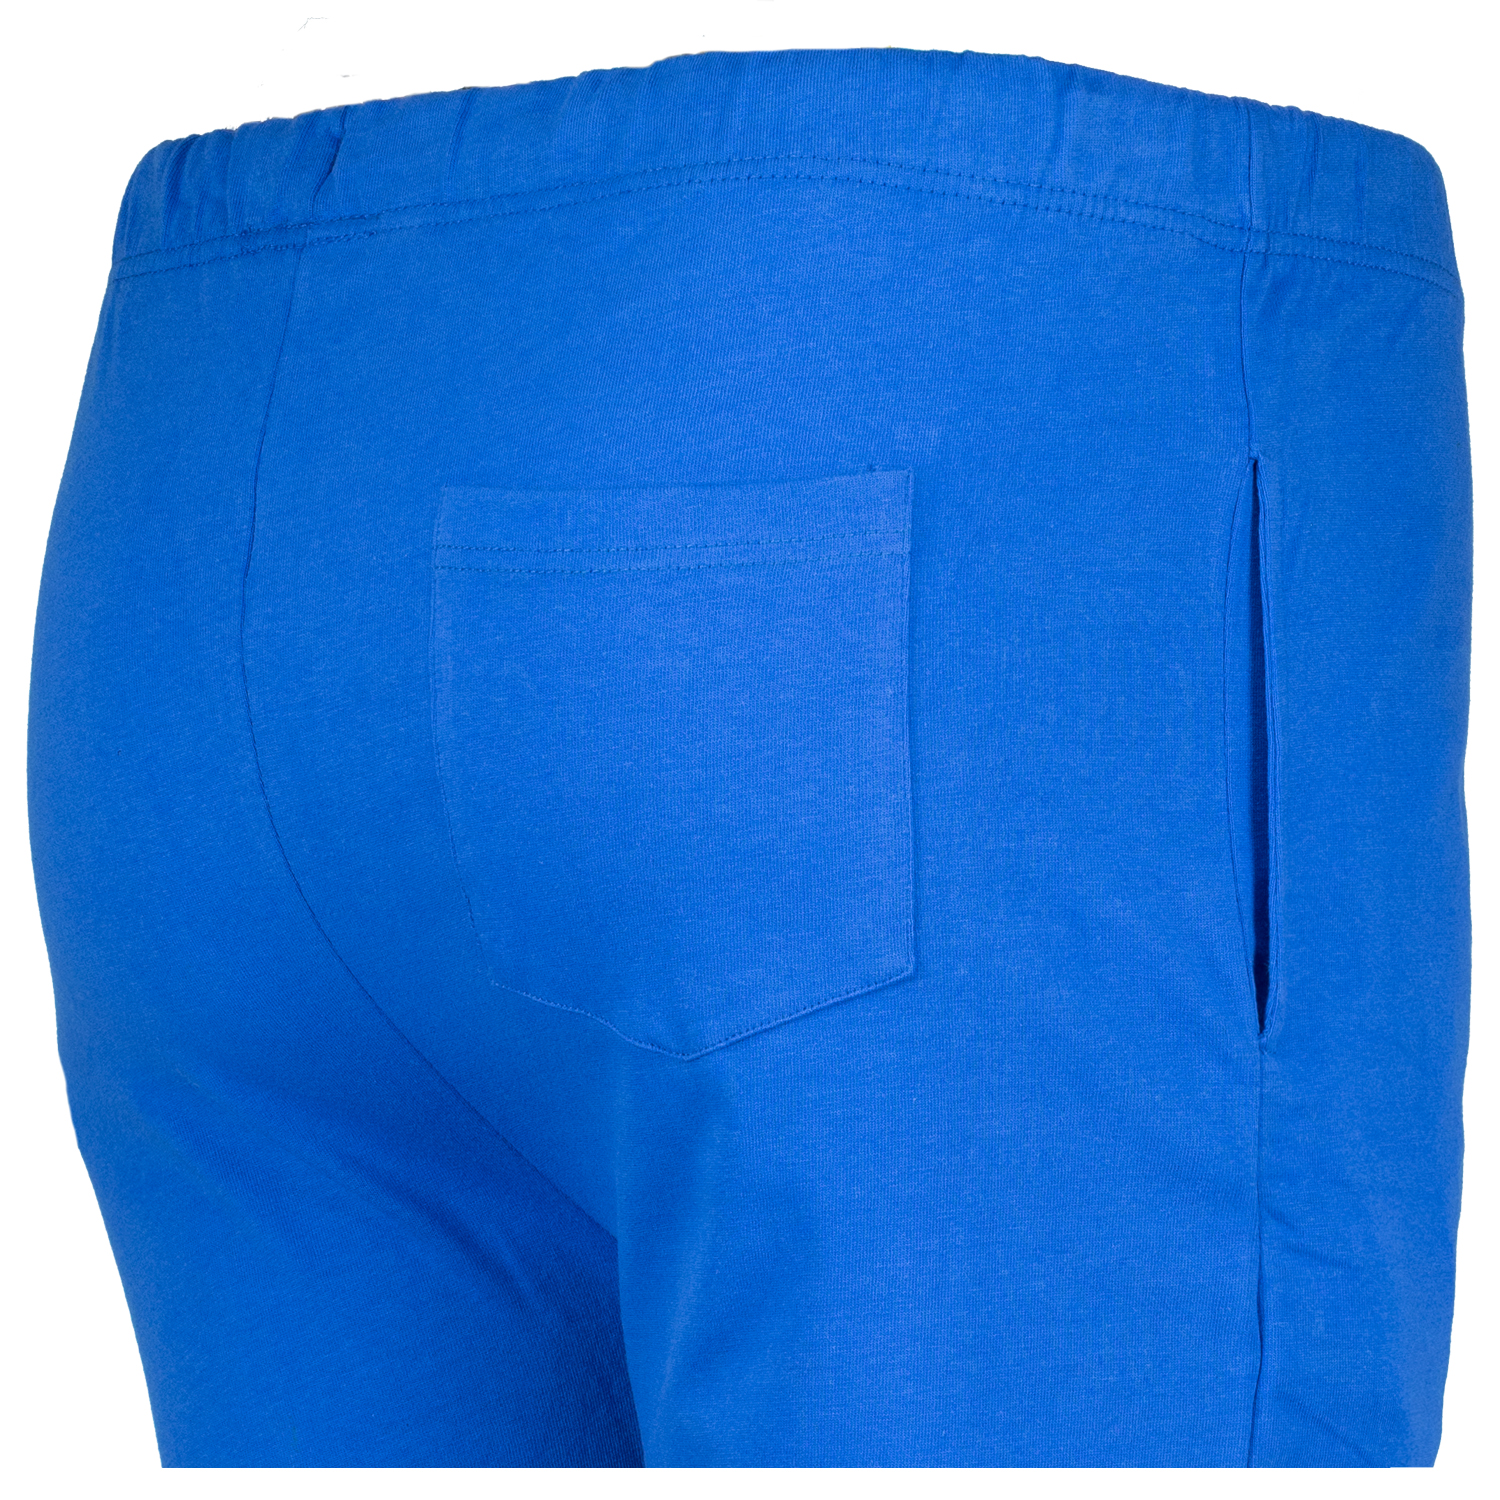 Short sleep pants for men by ADAMO series "Gerd" royal blue in oversizes up to 10XL